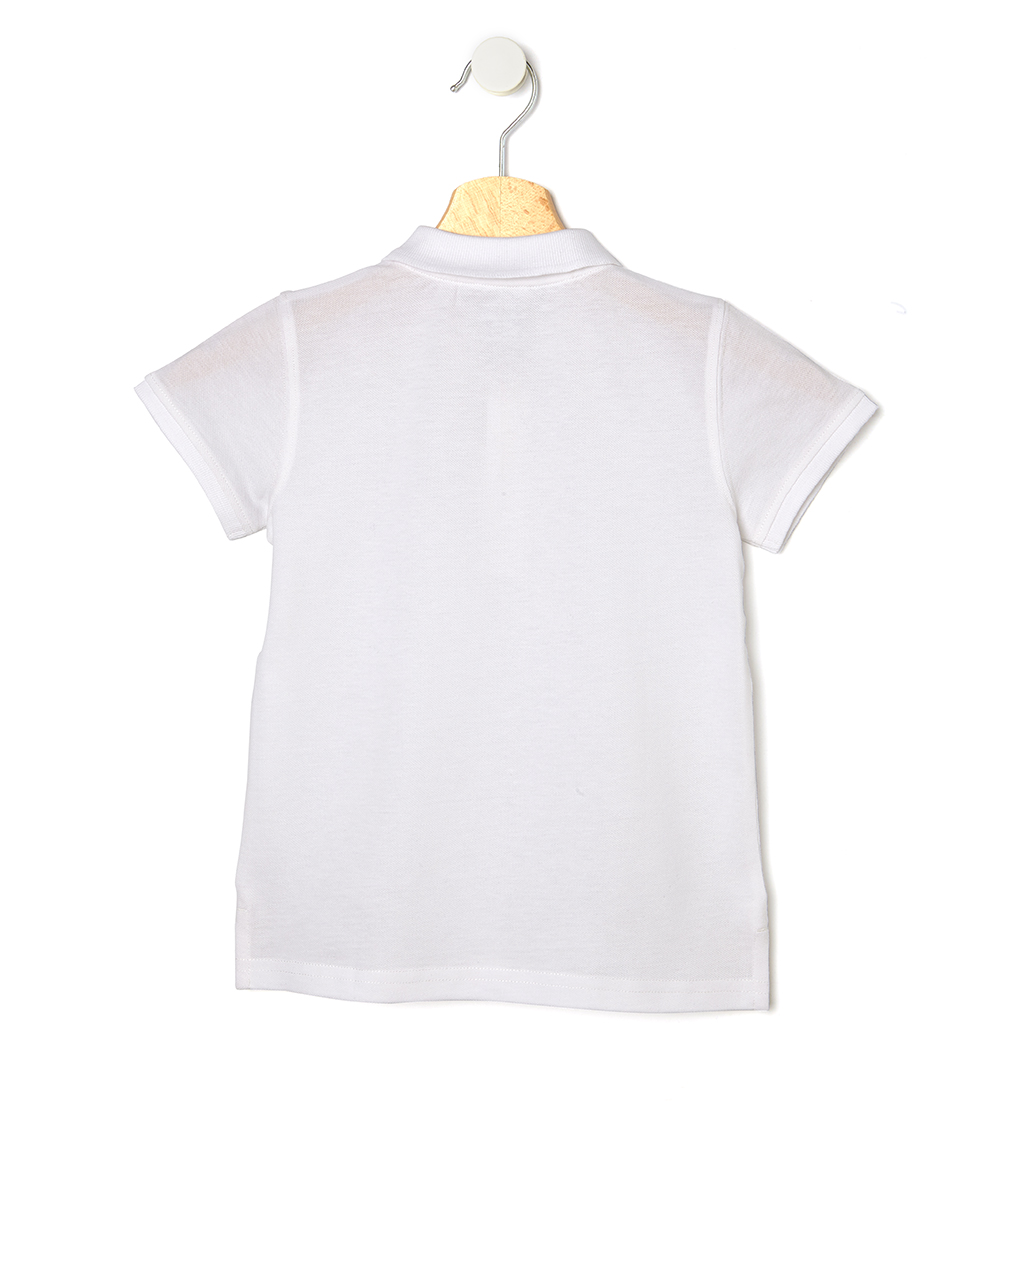 Mπλούζα πόλο πικέ λευκή μεγ.8-9/9-10 ετών για αγόρι - Prénatal